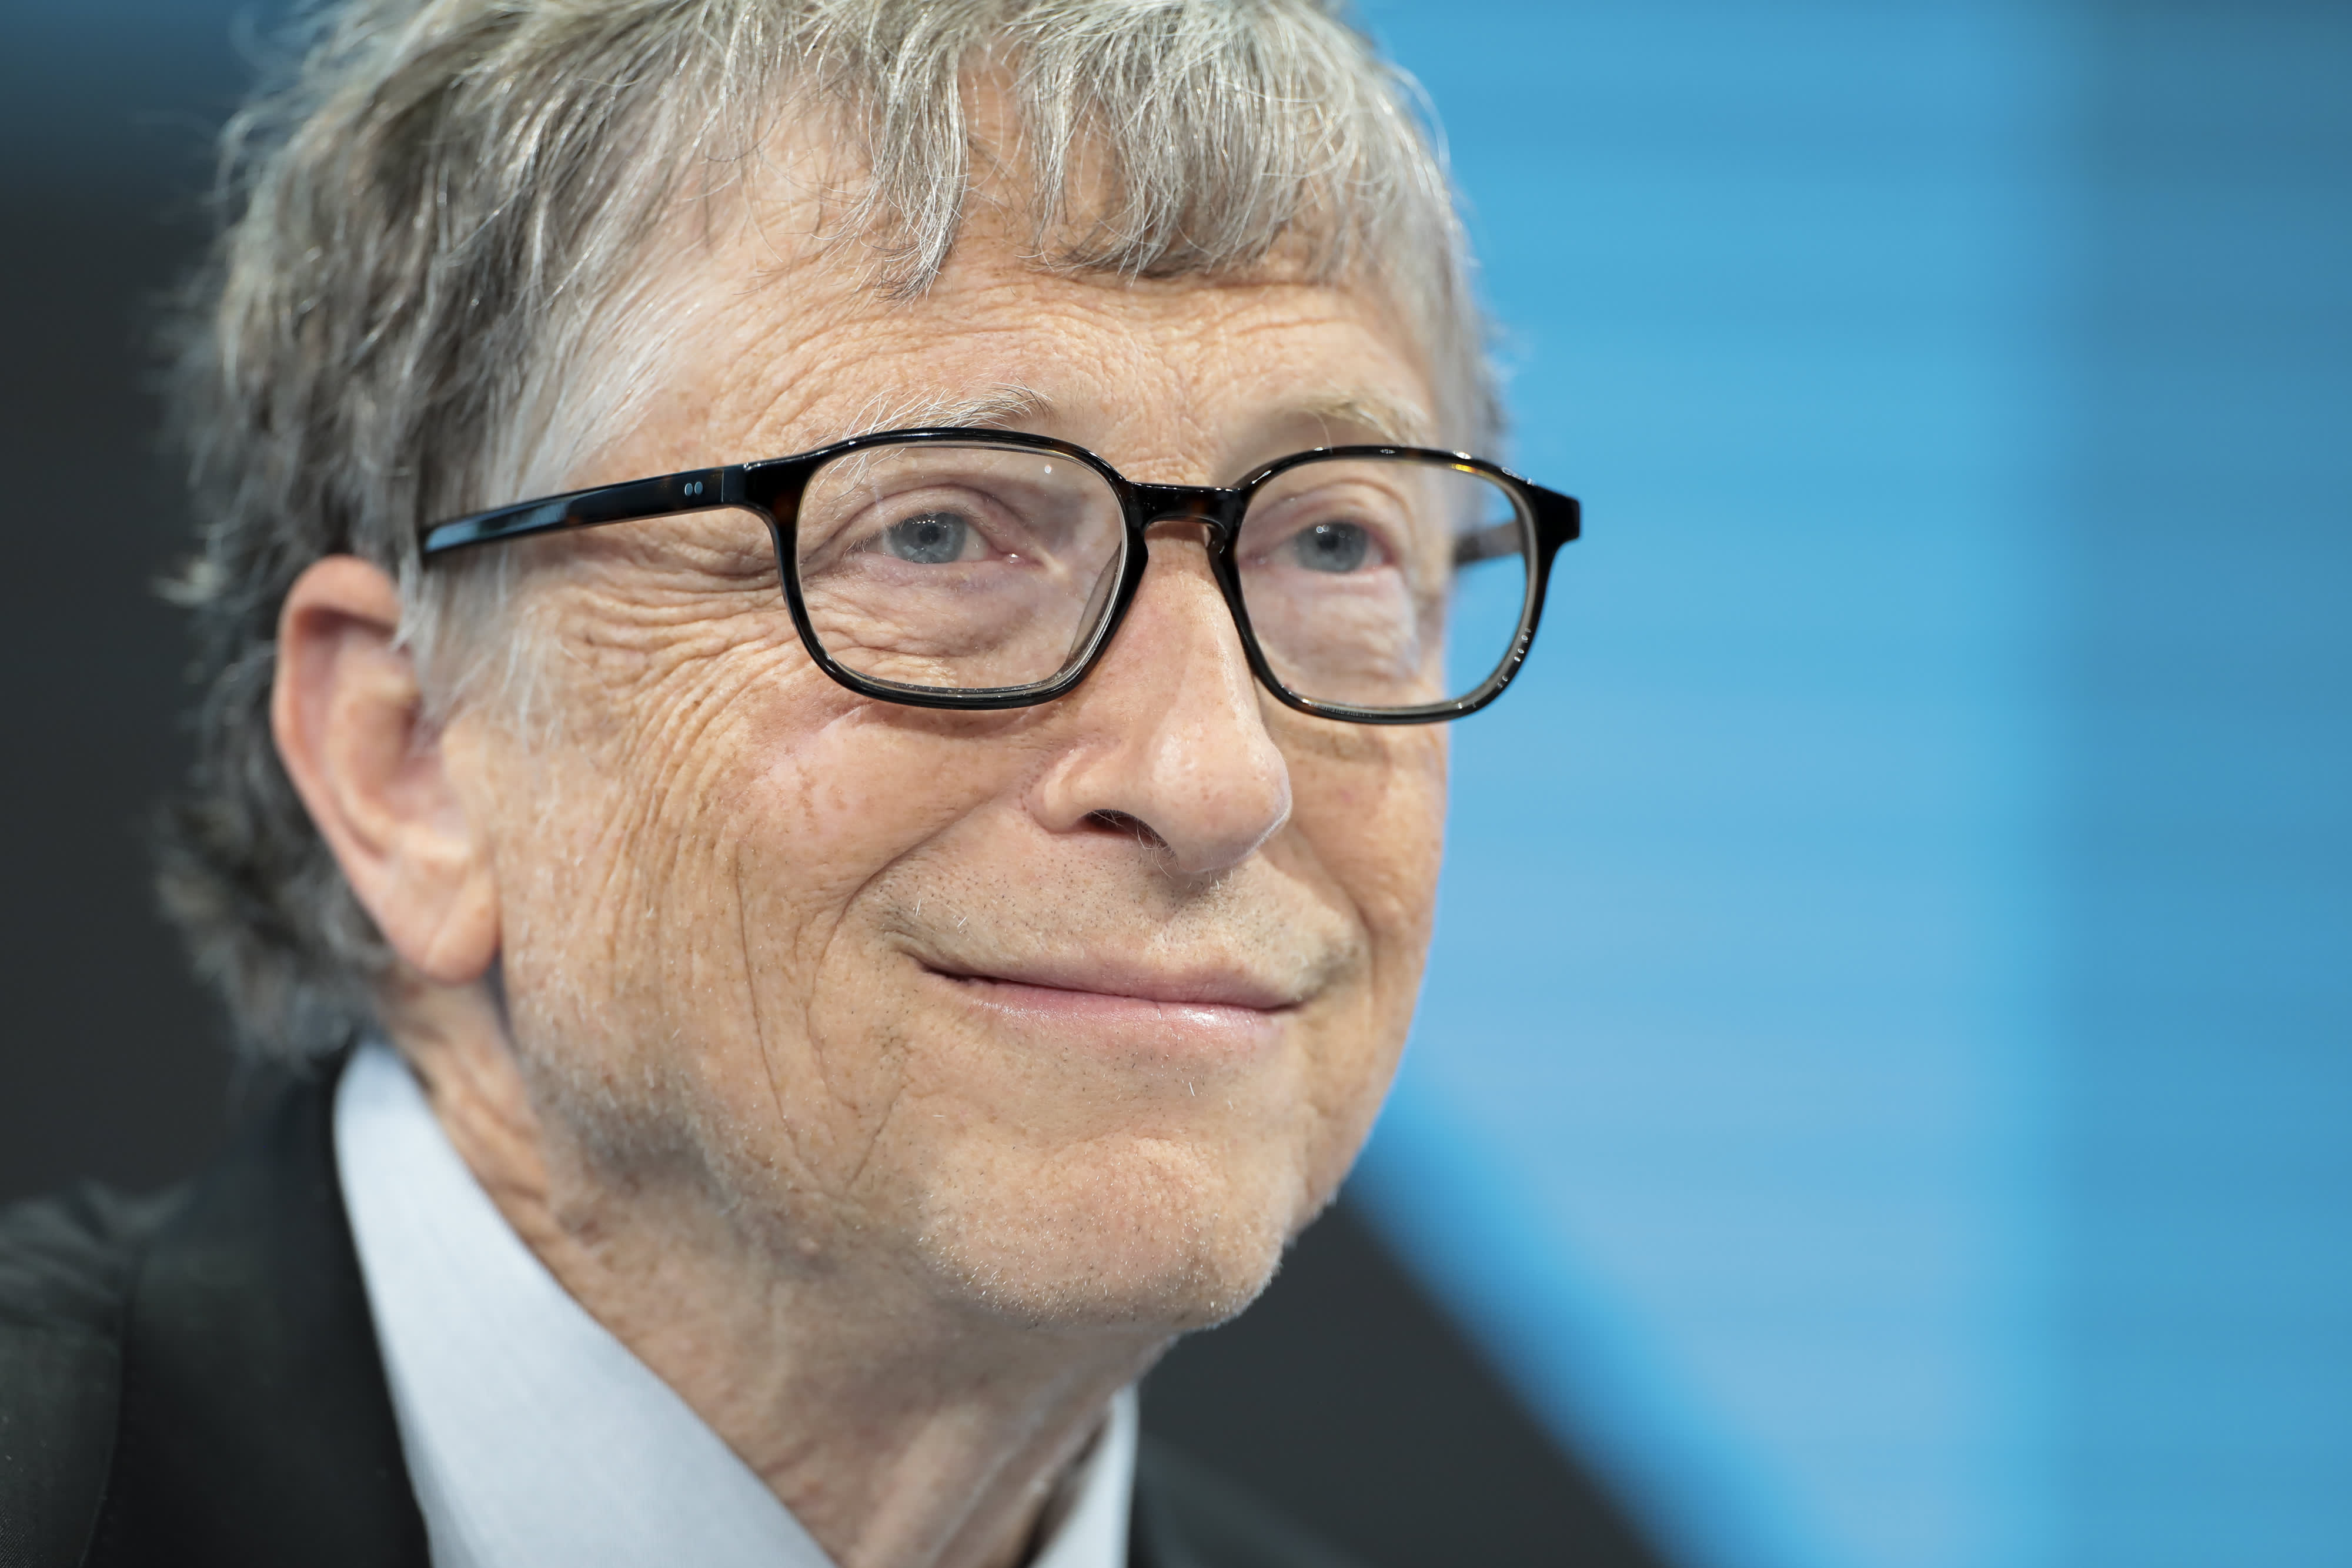 Bill Gates leaves Microsoft board